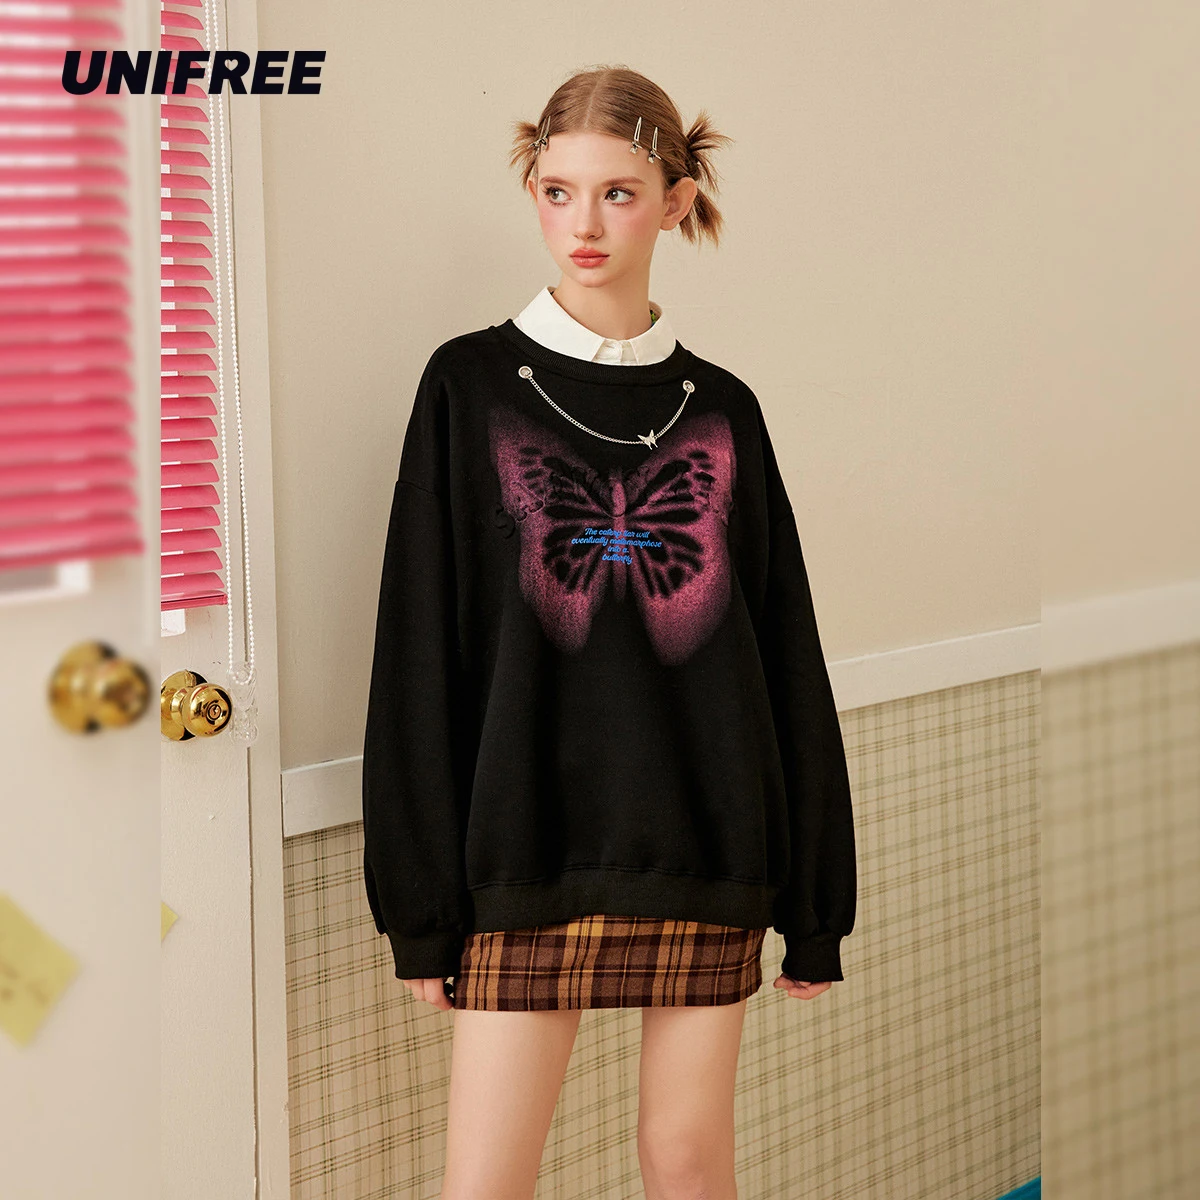 

UNIFREE Butterfly Print Black Sweatshirts Women Streetwear Retro Hip Hop Loose Pullovers Fashion Gothic Long Sleeves Women Tops